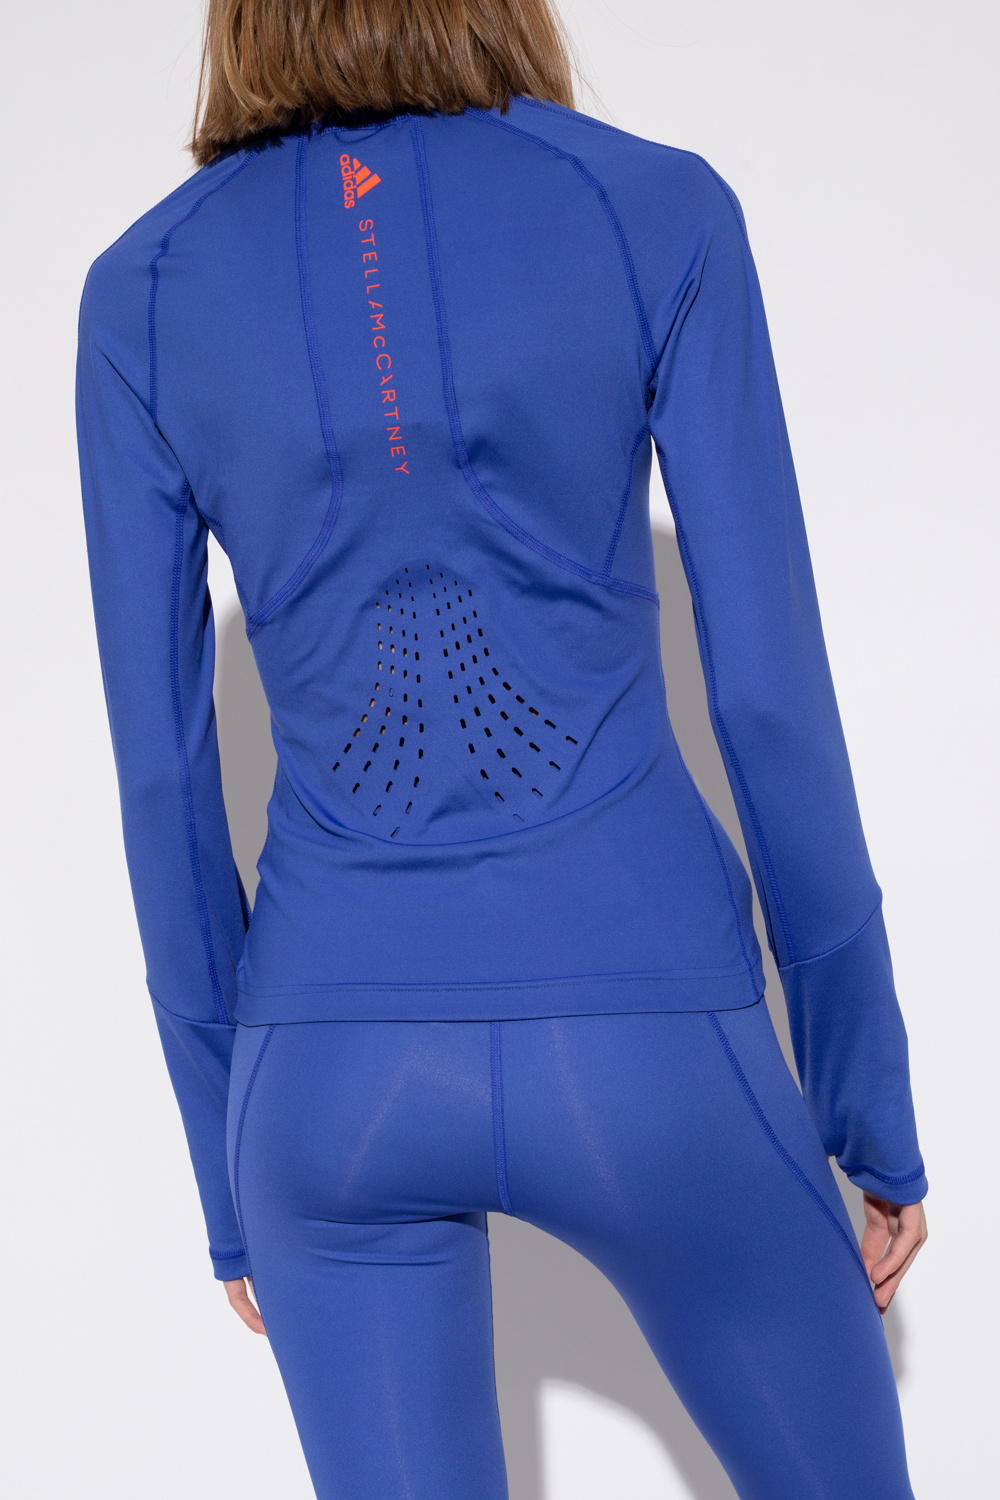 ADIDAS by Stella McCartney adidas velvet sweat suit